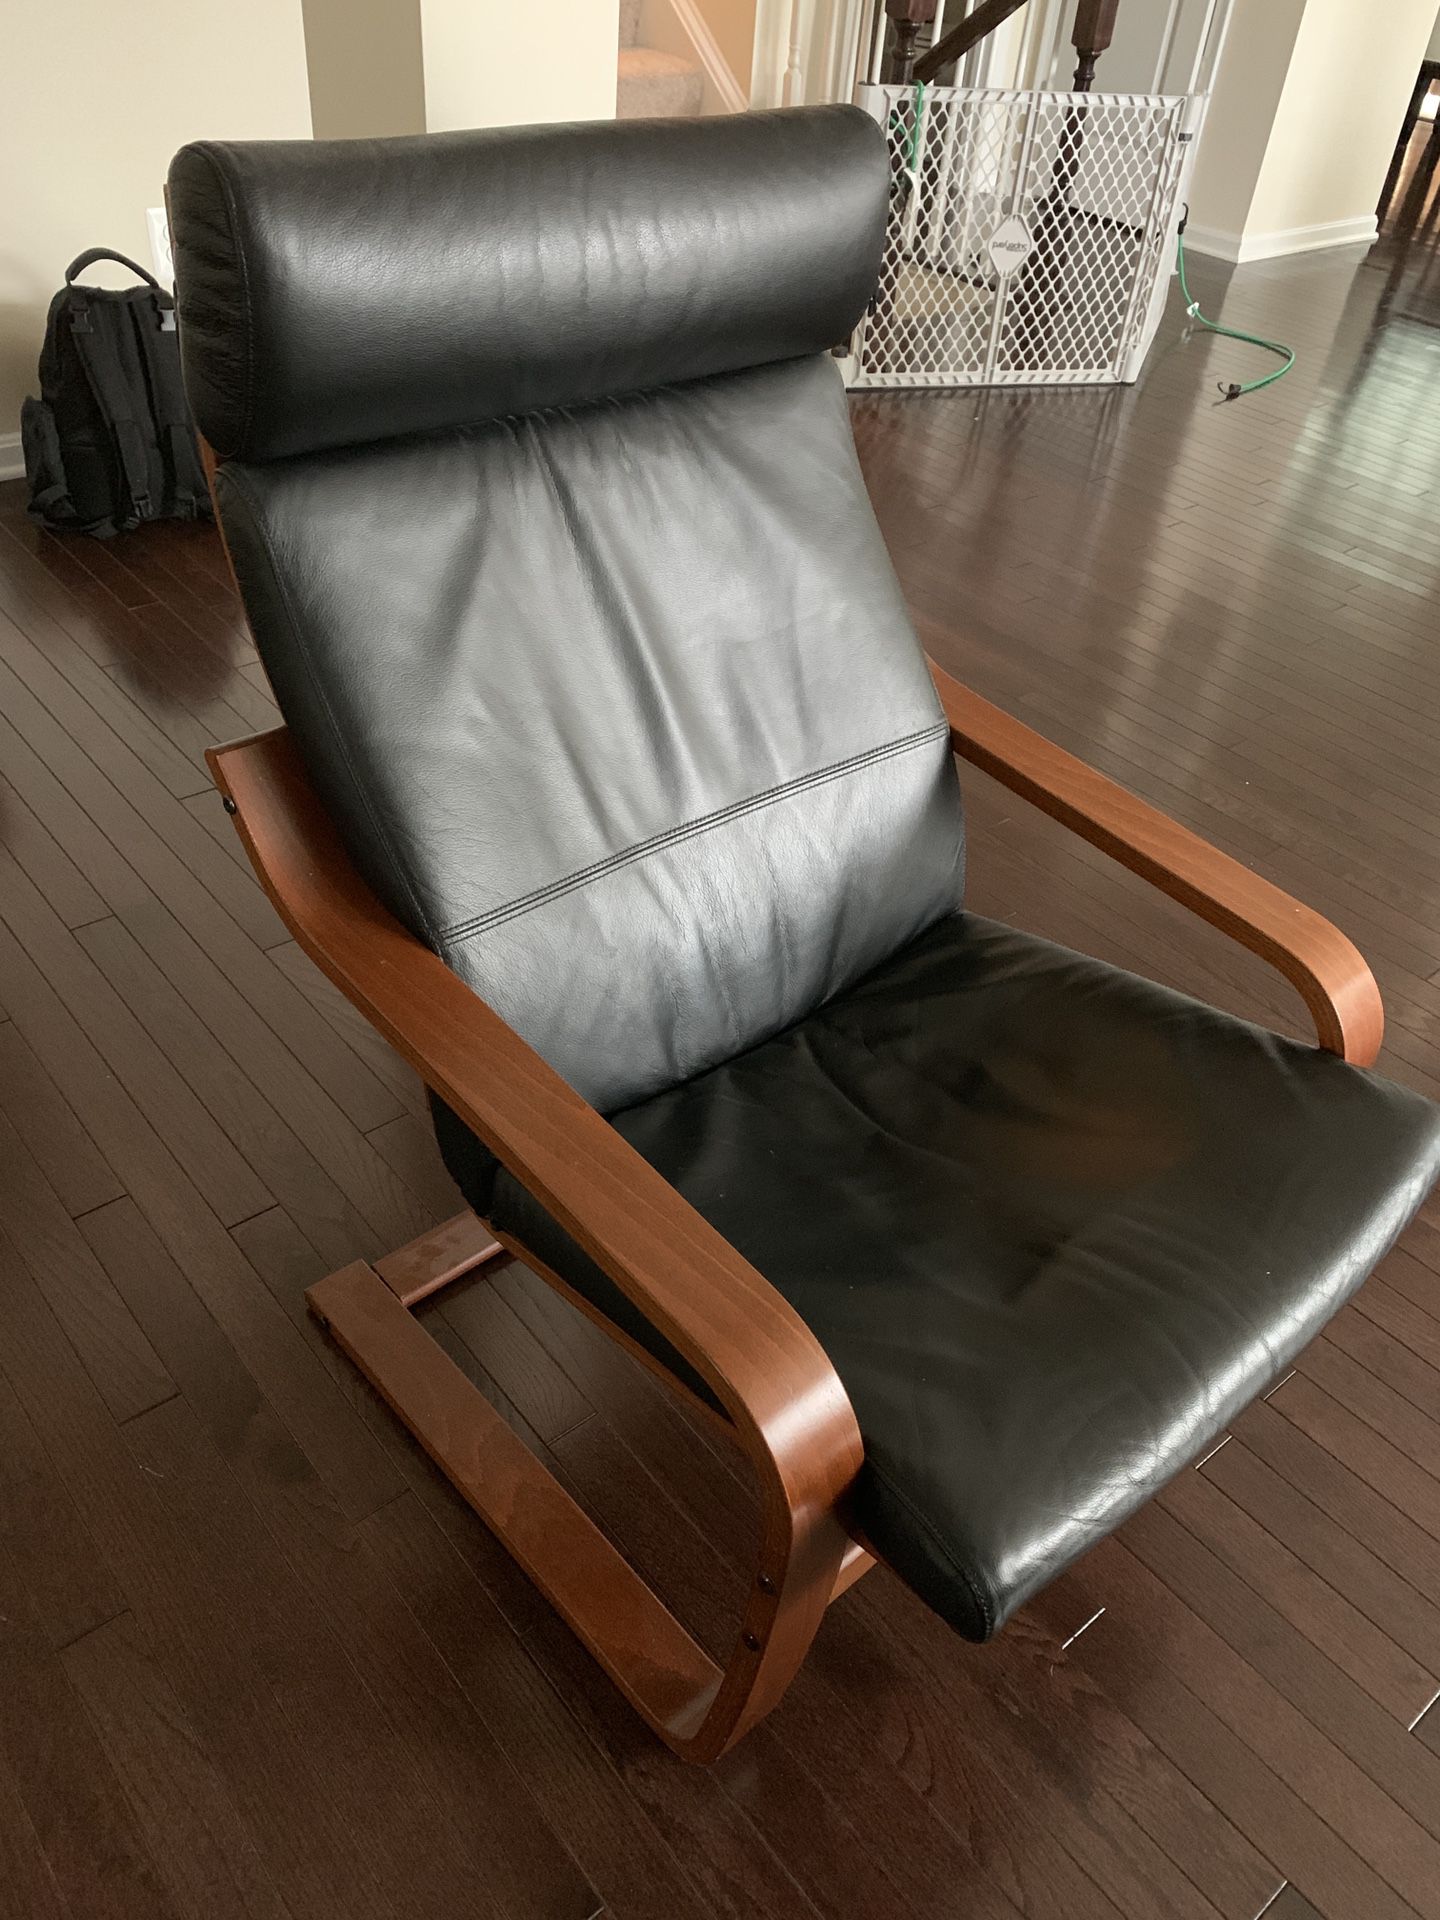 IKEA Leather Rocking Chair